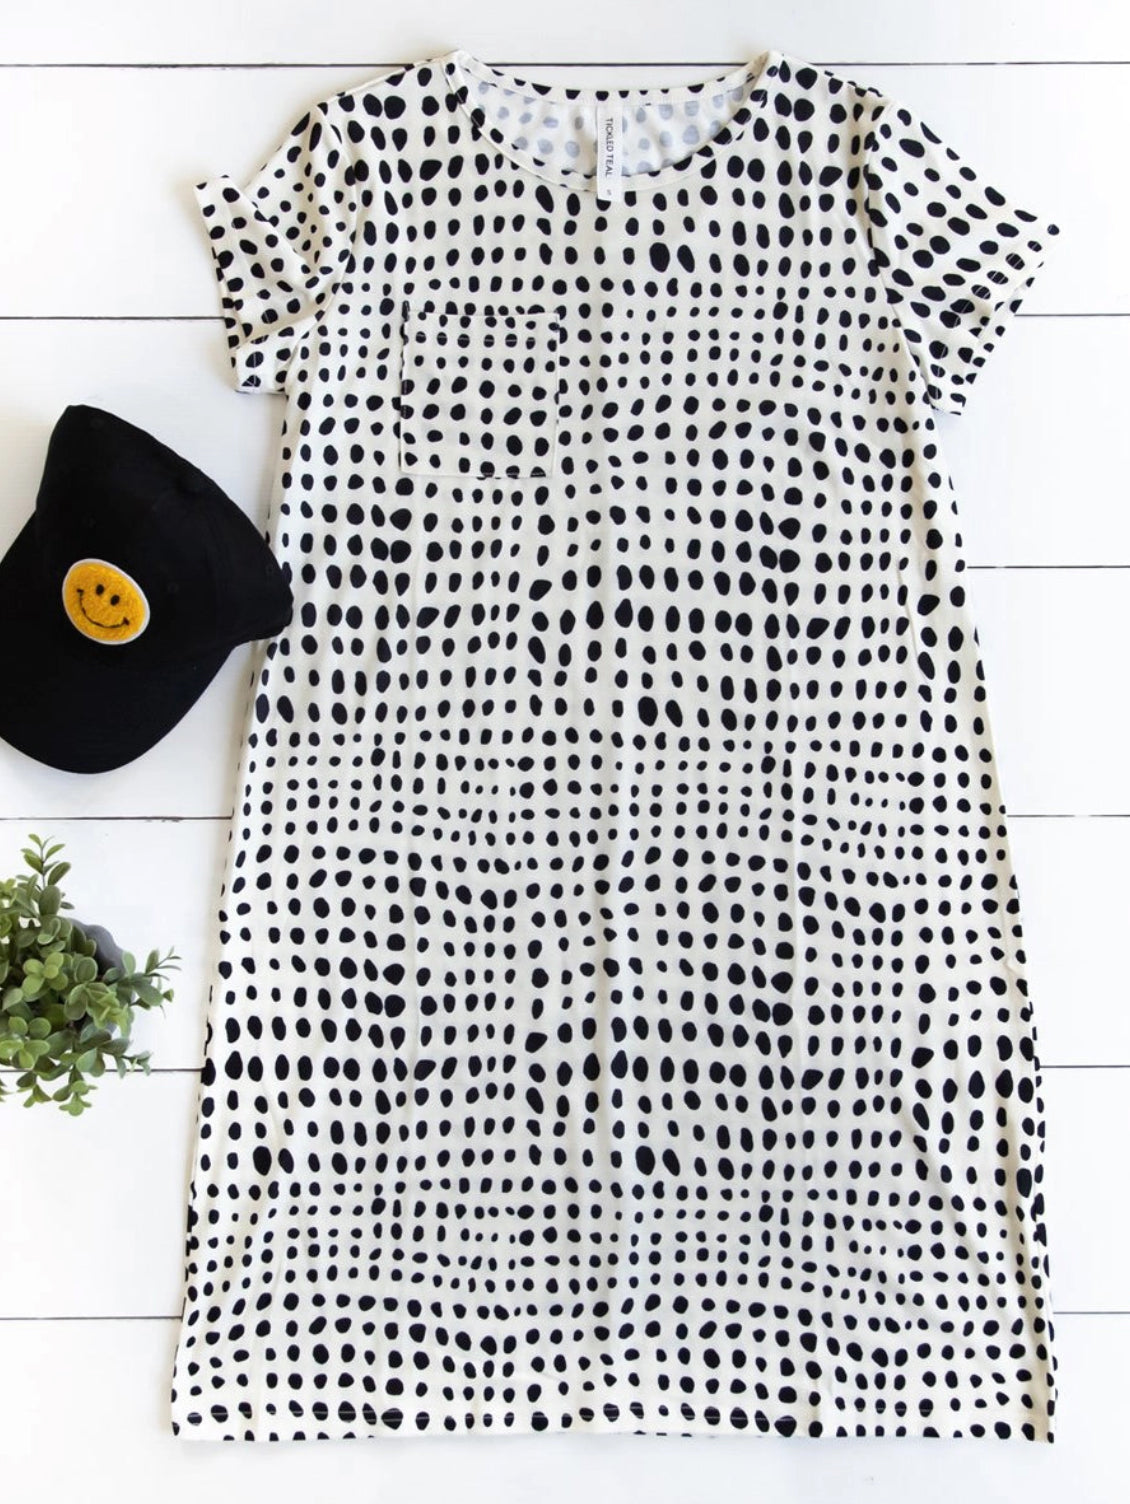 Dot patterned pocket tee dress